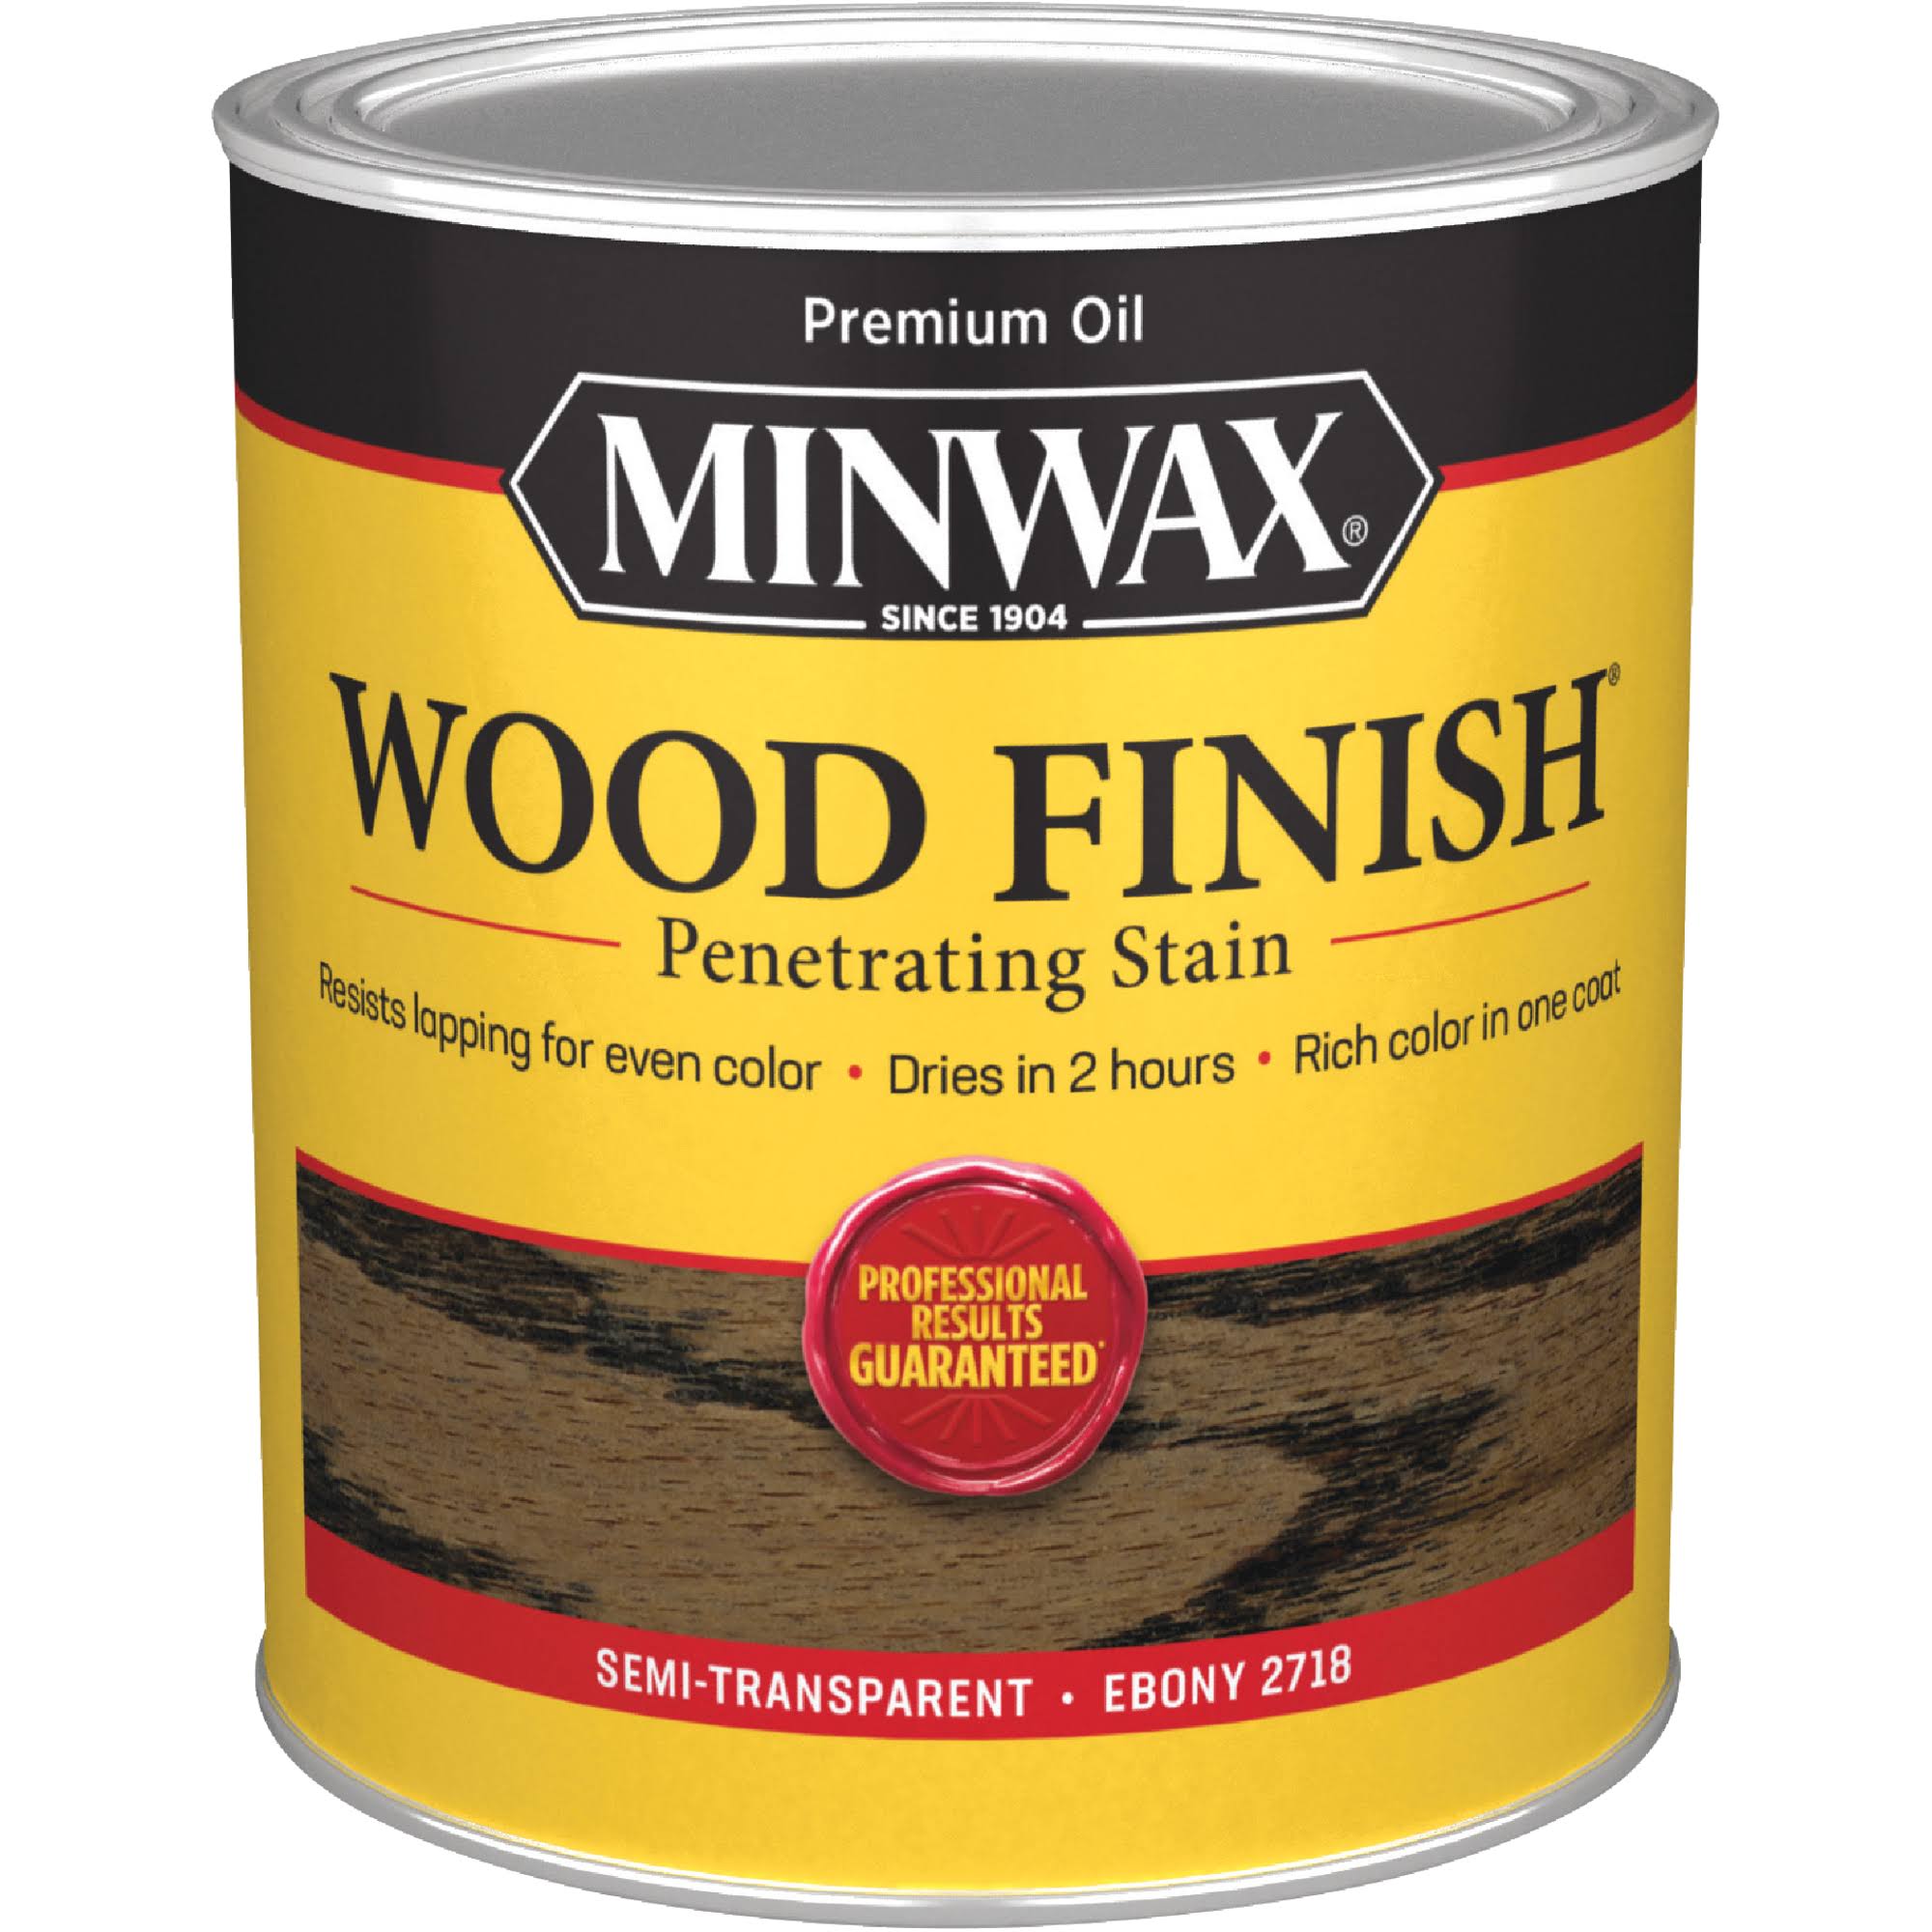 Minwax Wood Finish Oil-Based Interior Stain - Ebony, 1qt